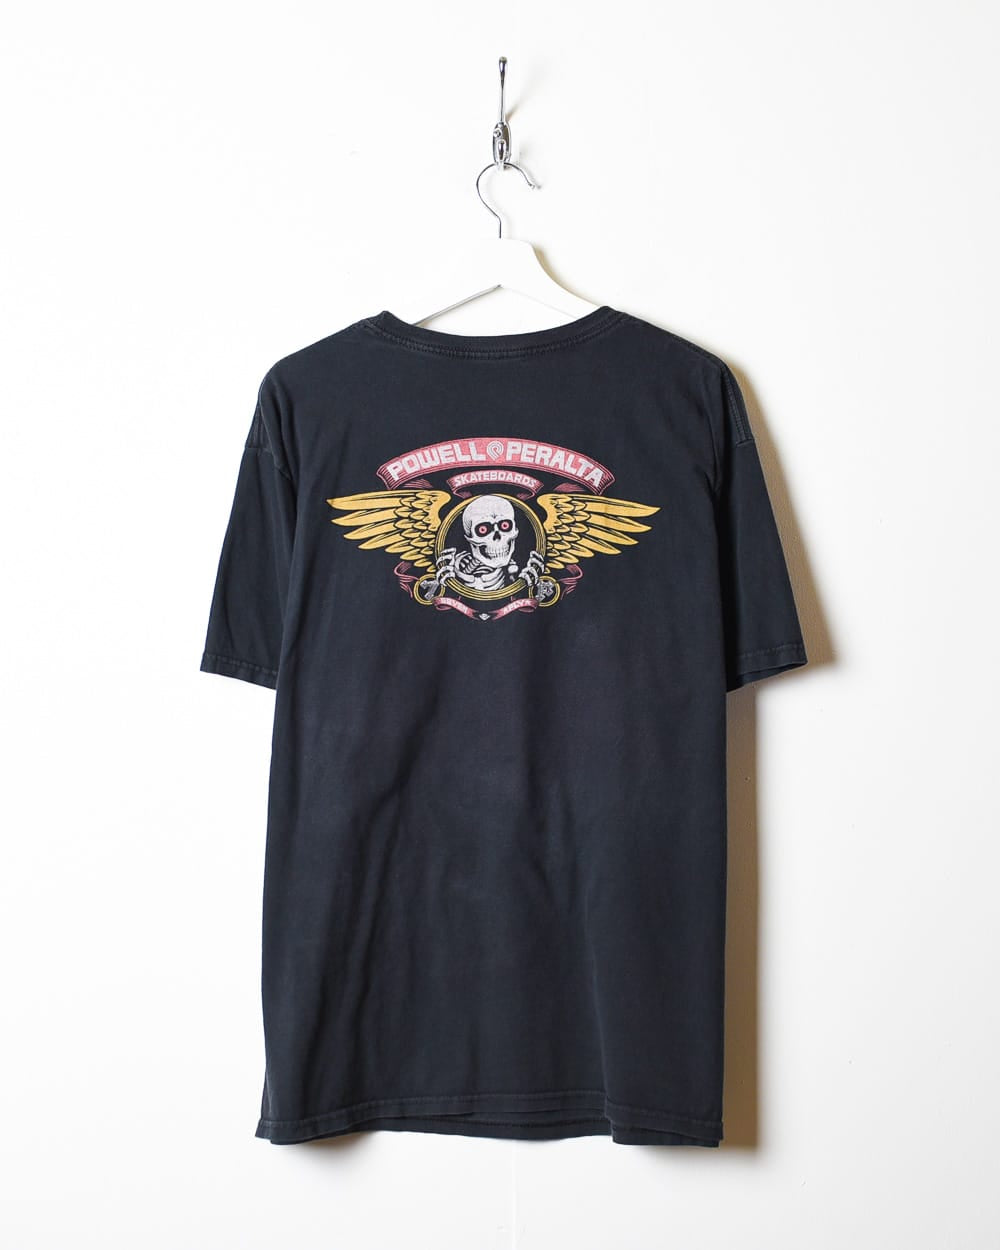 Vintage 90s Black Powel Peralta Skateboards T-Shirt - Large Cotton